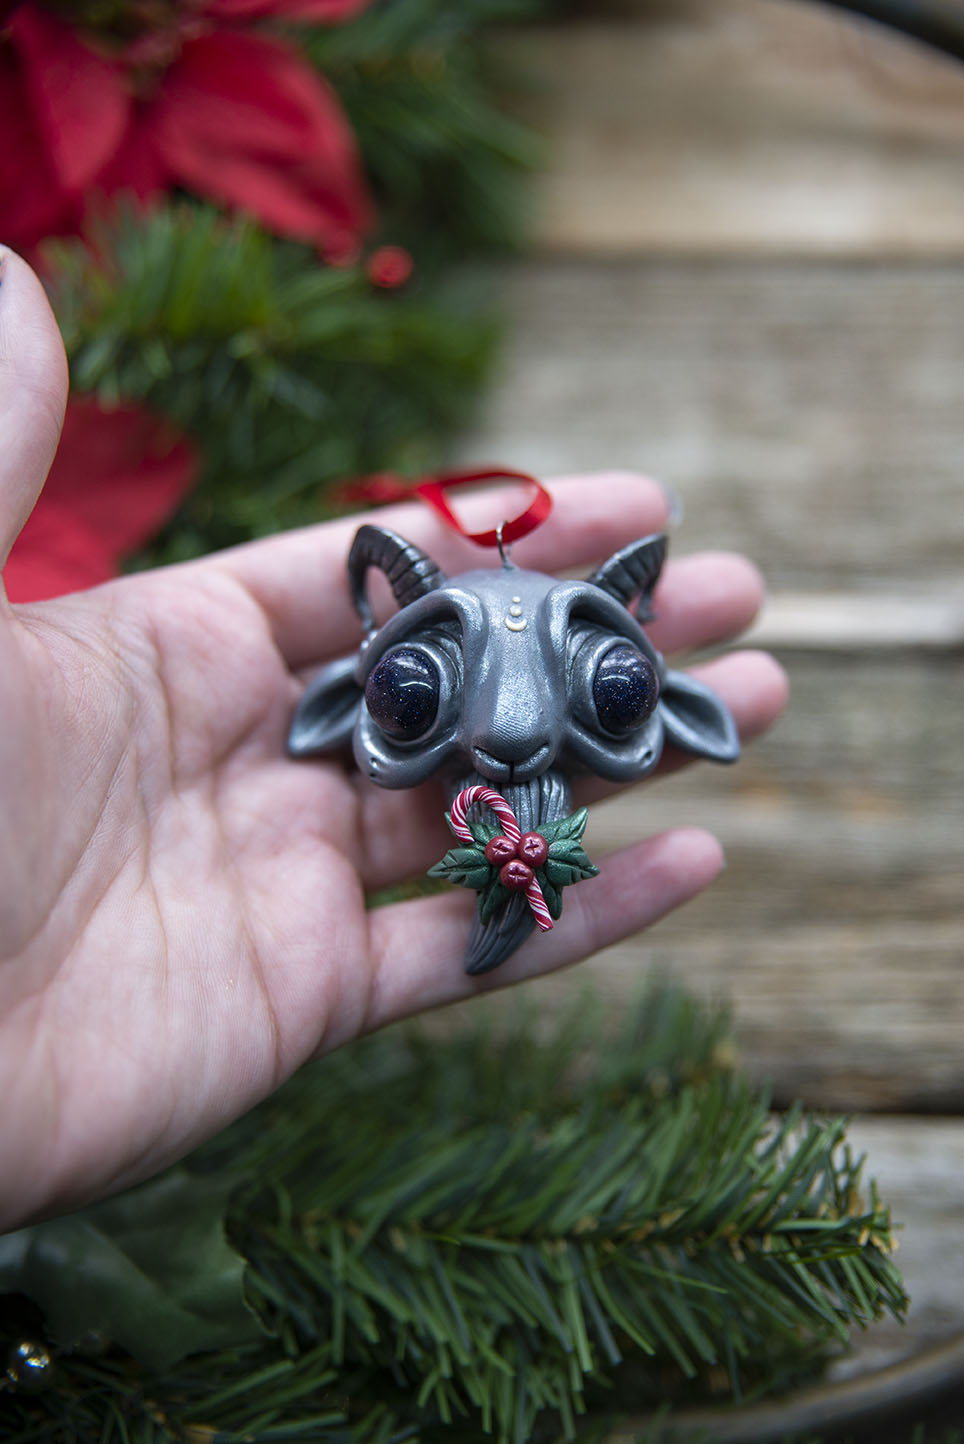 Gray Yule Goat Ornament #2